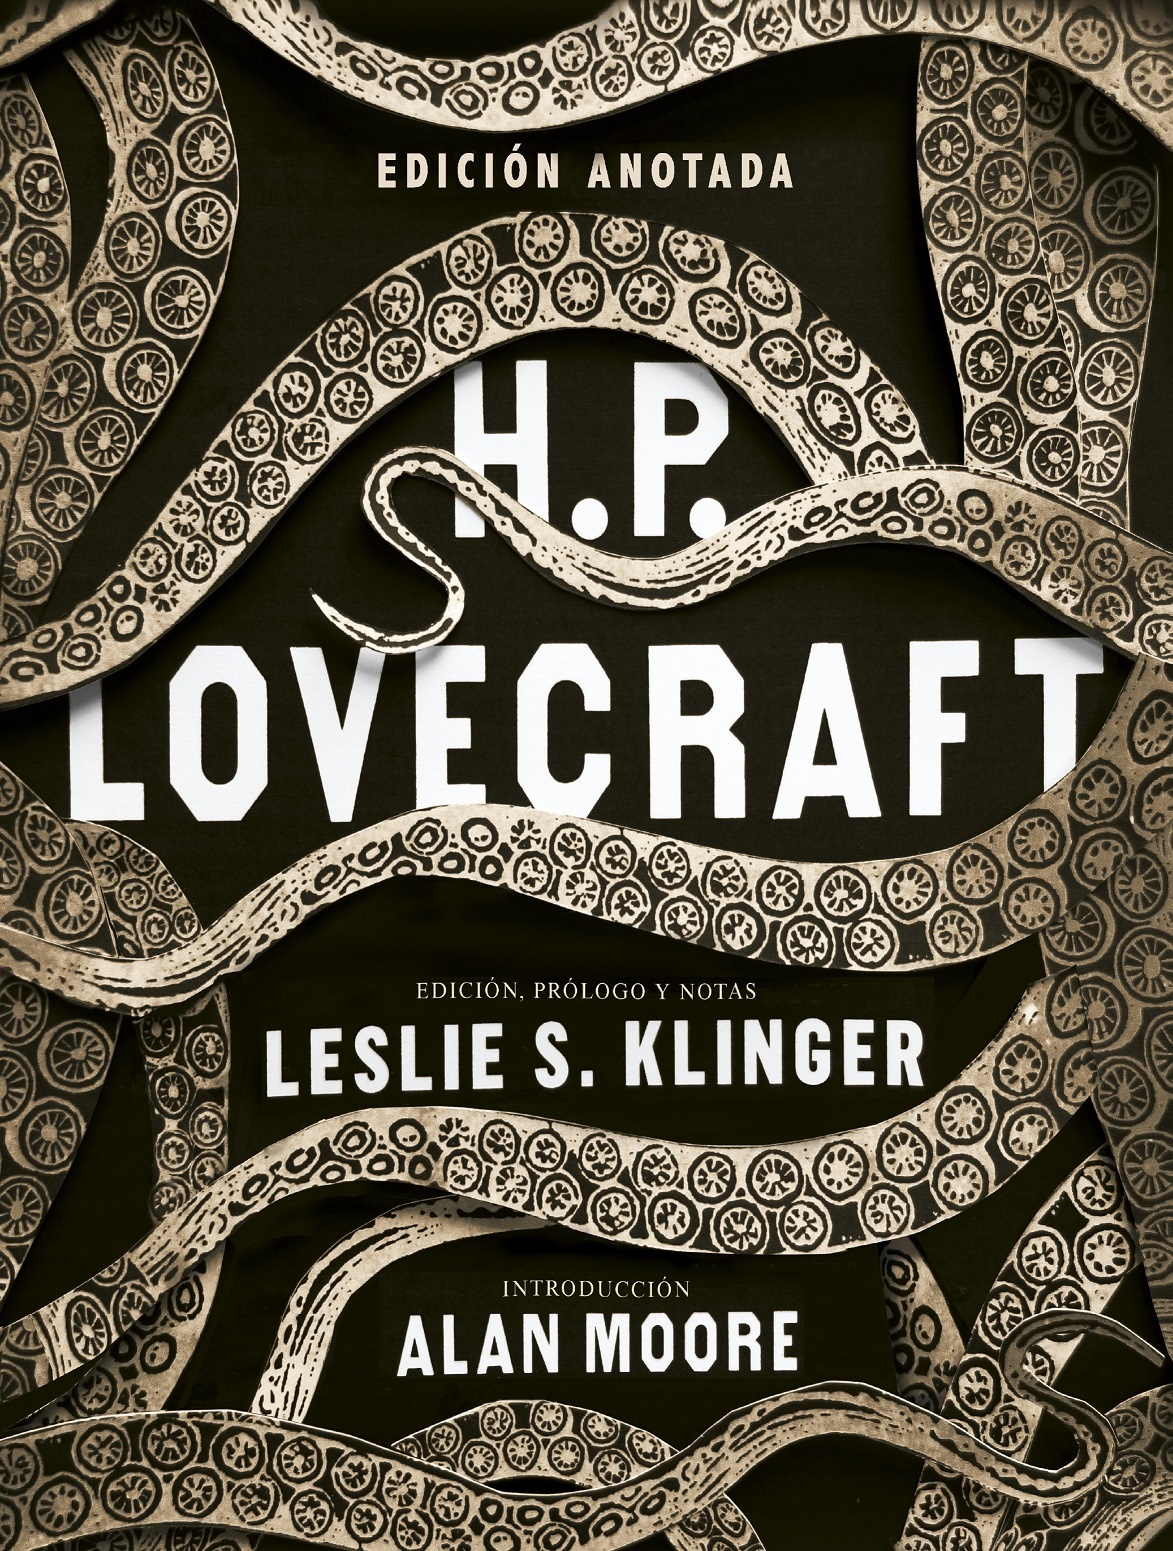 H.P. Lovecraft anotado. 